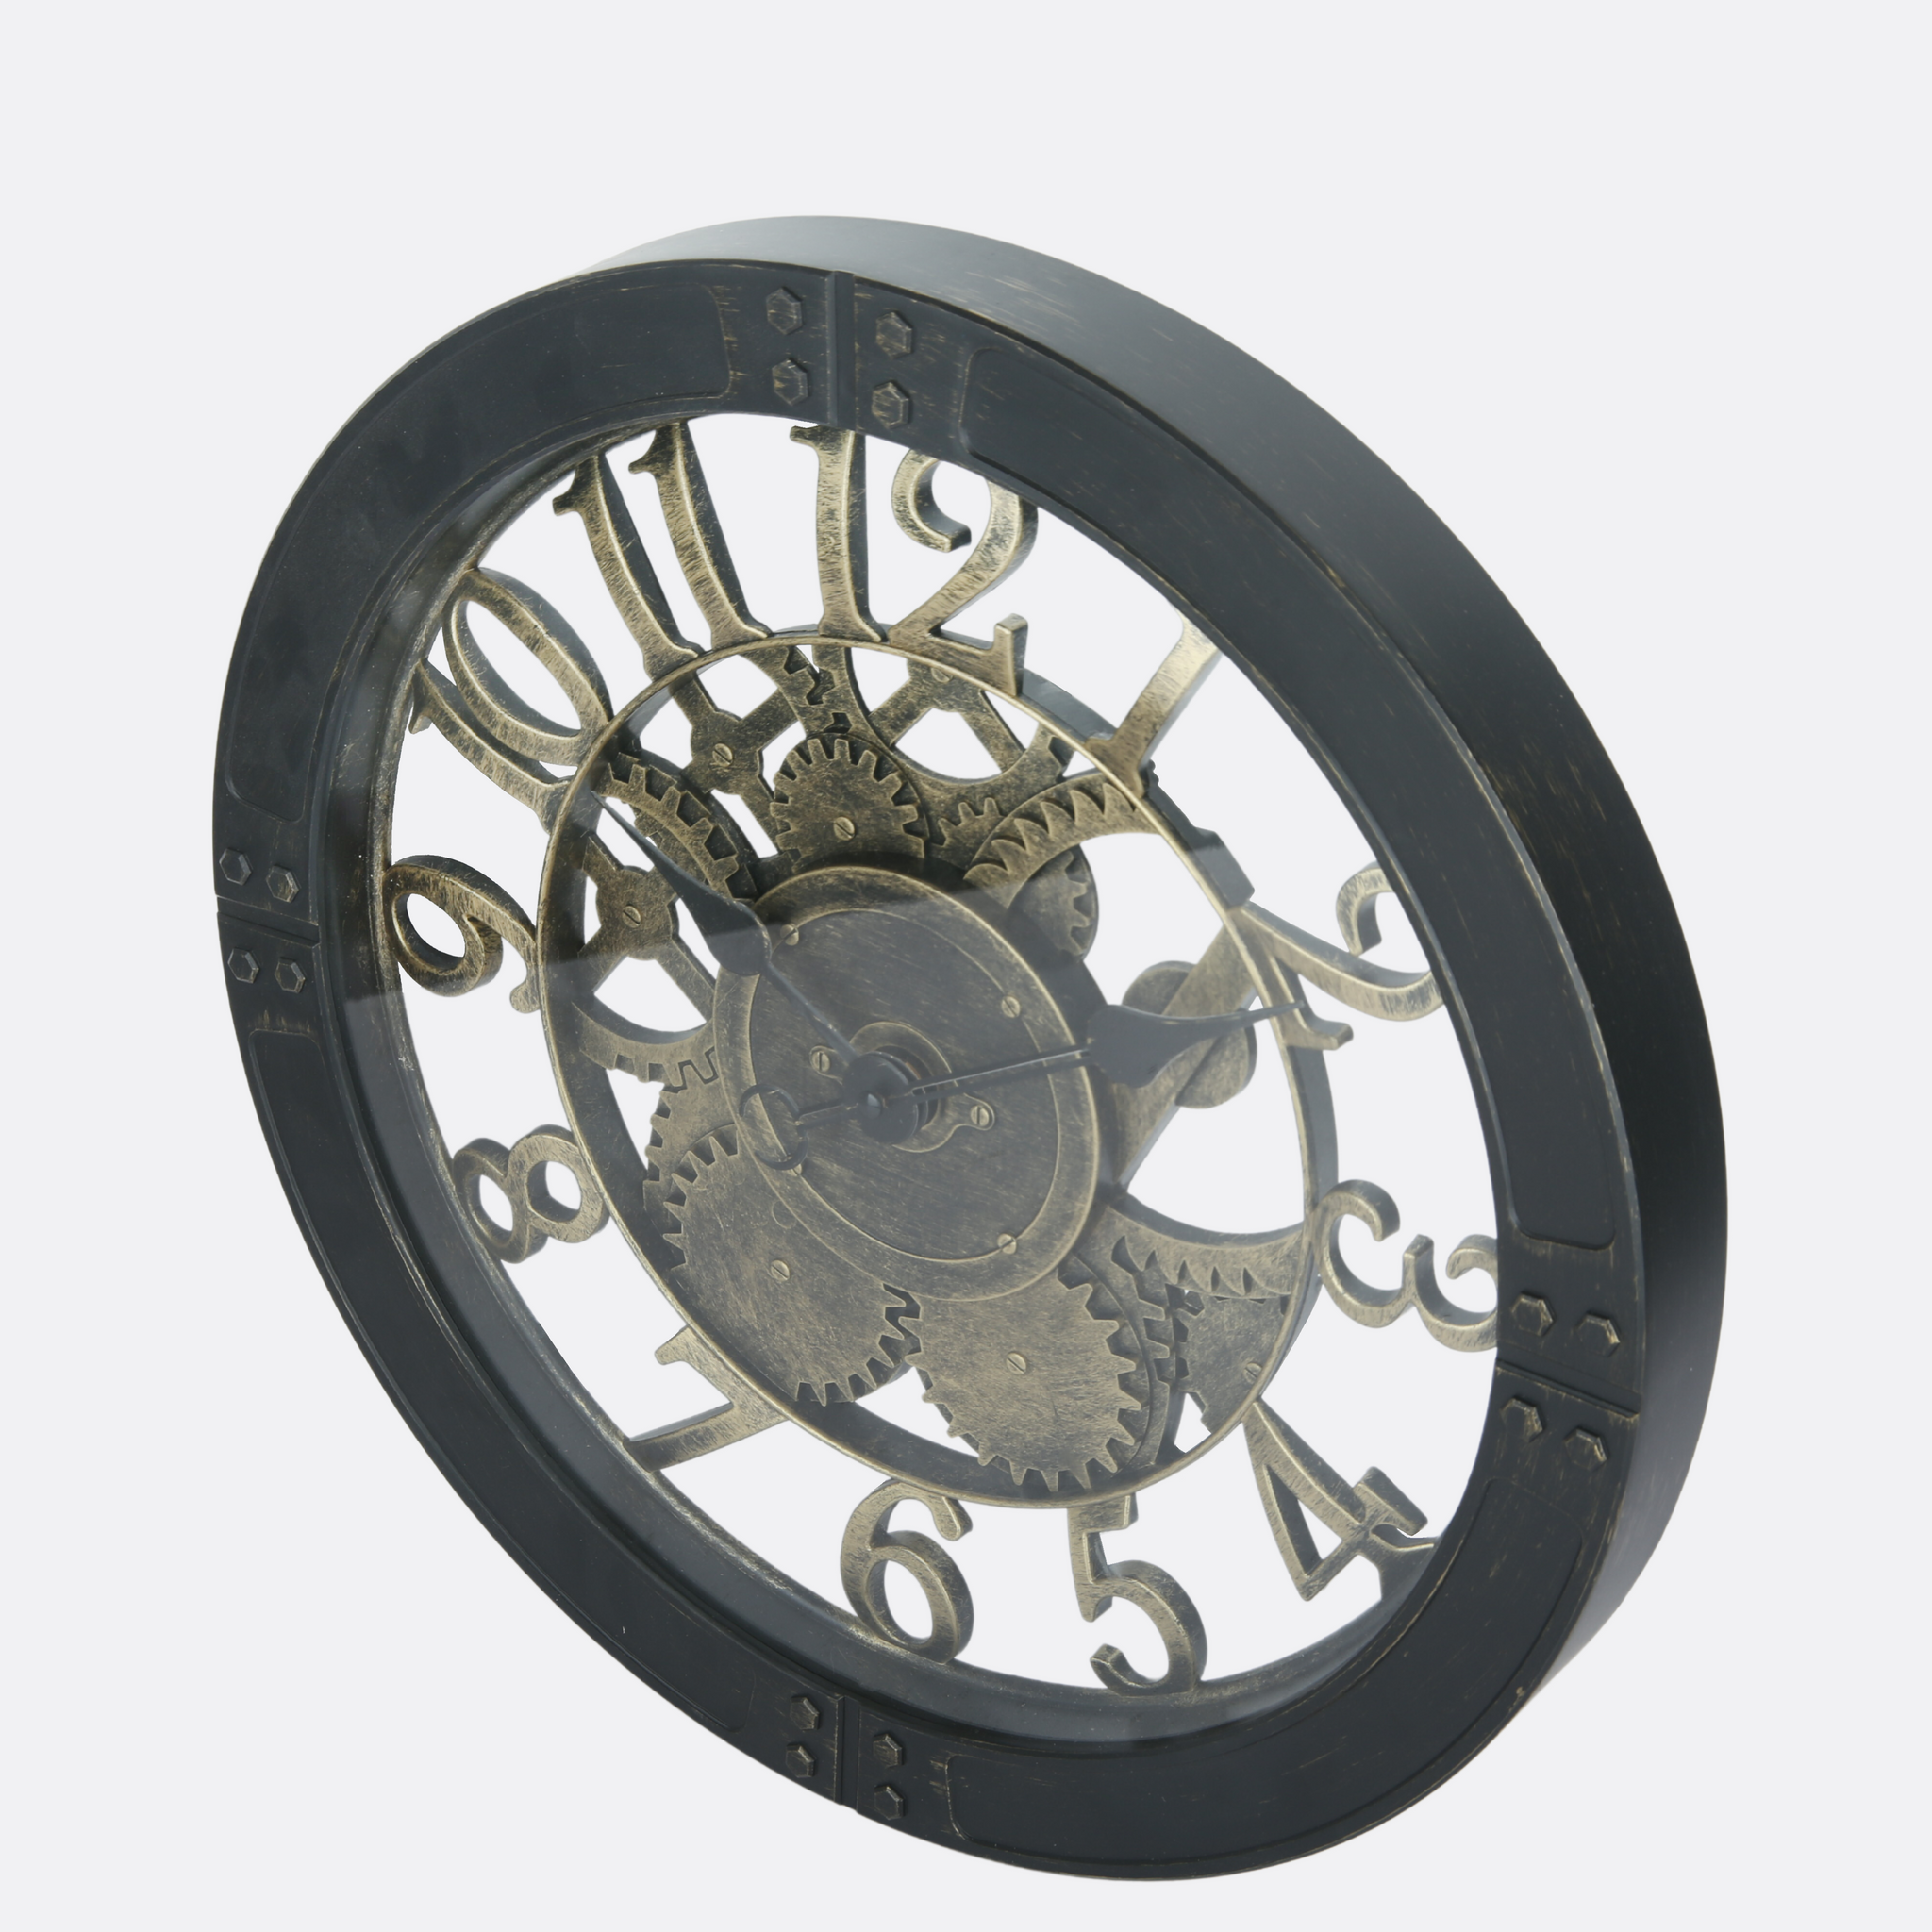 Vintage Rim Wall Clock